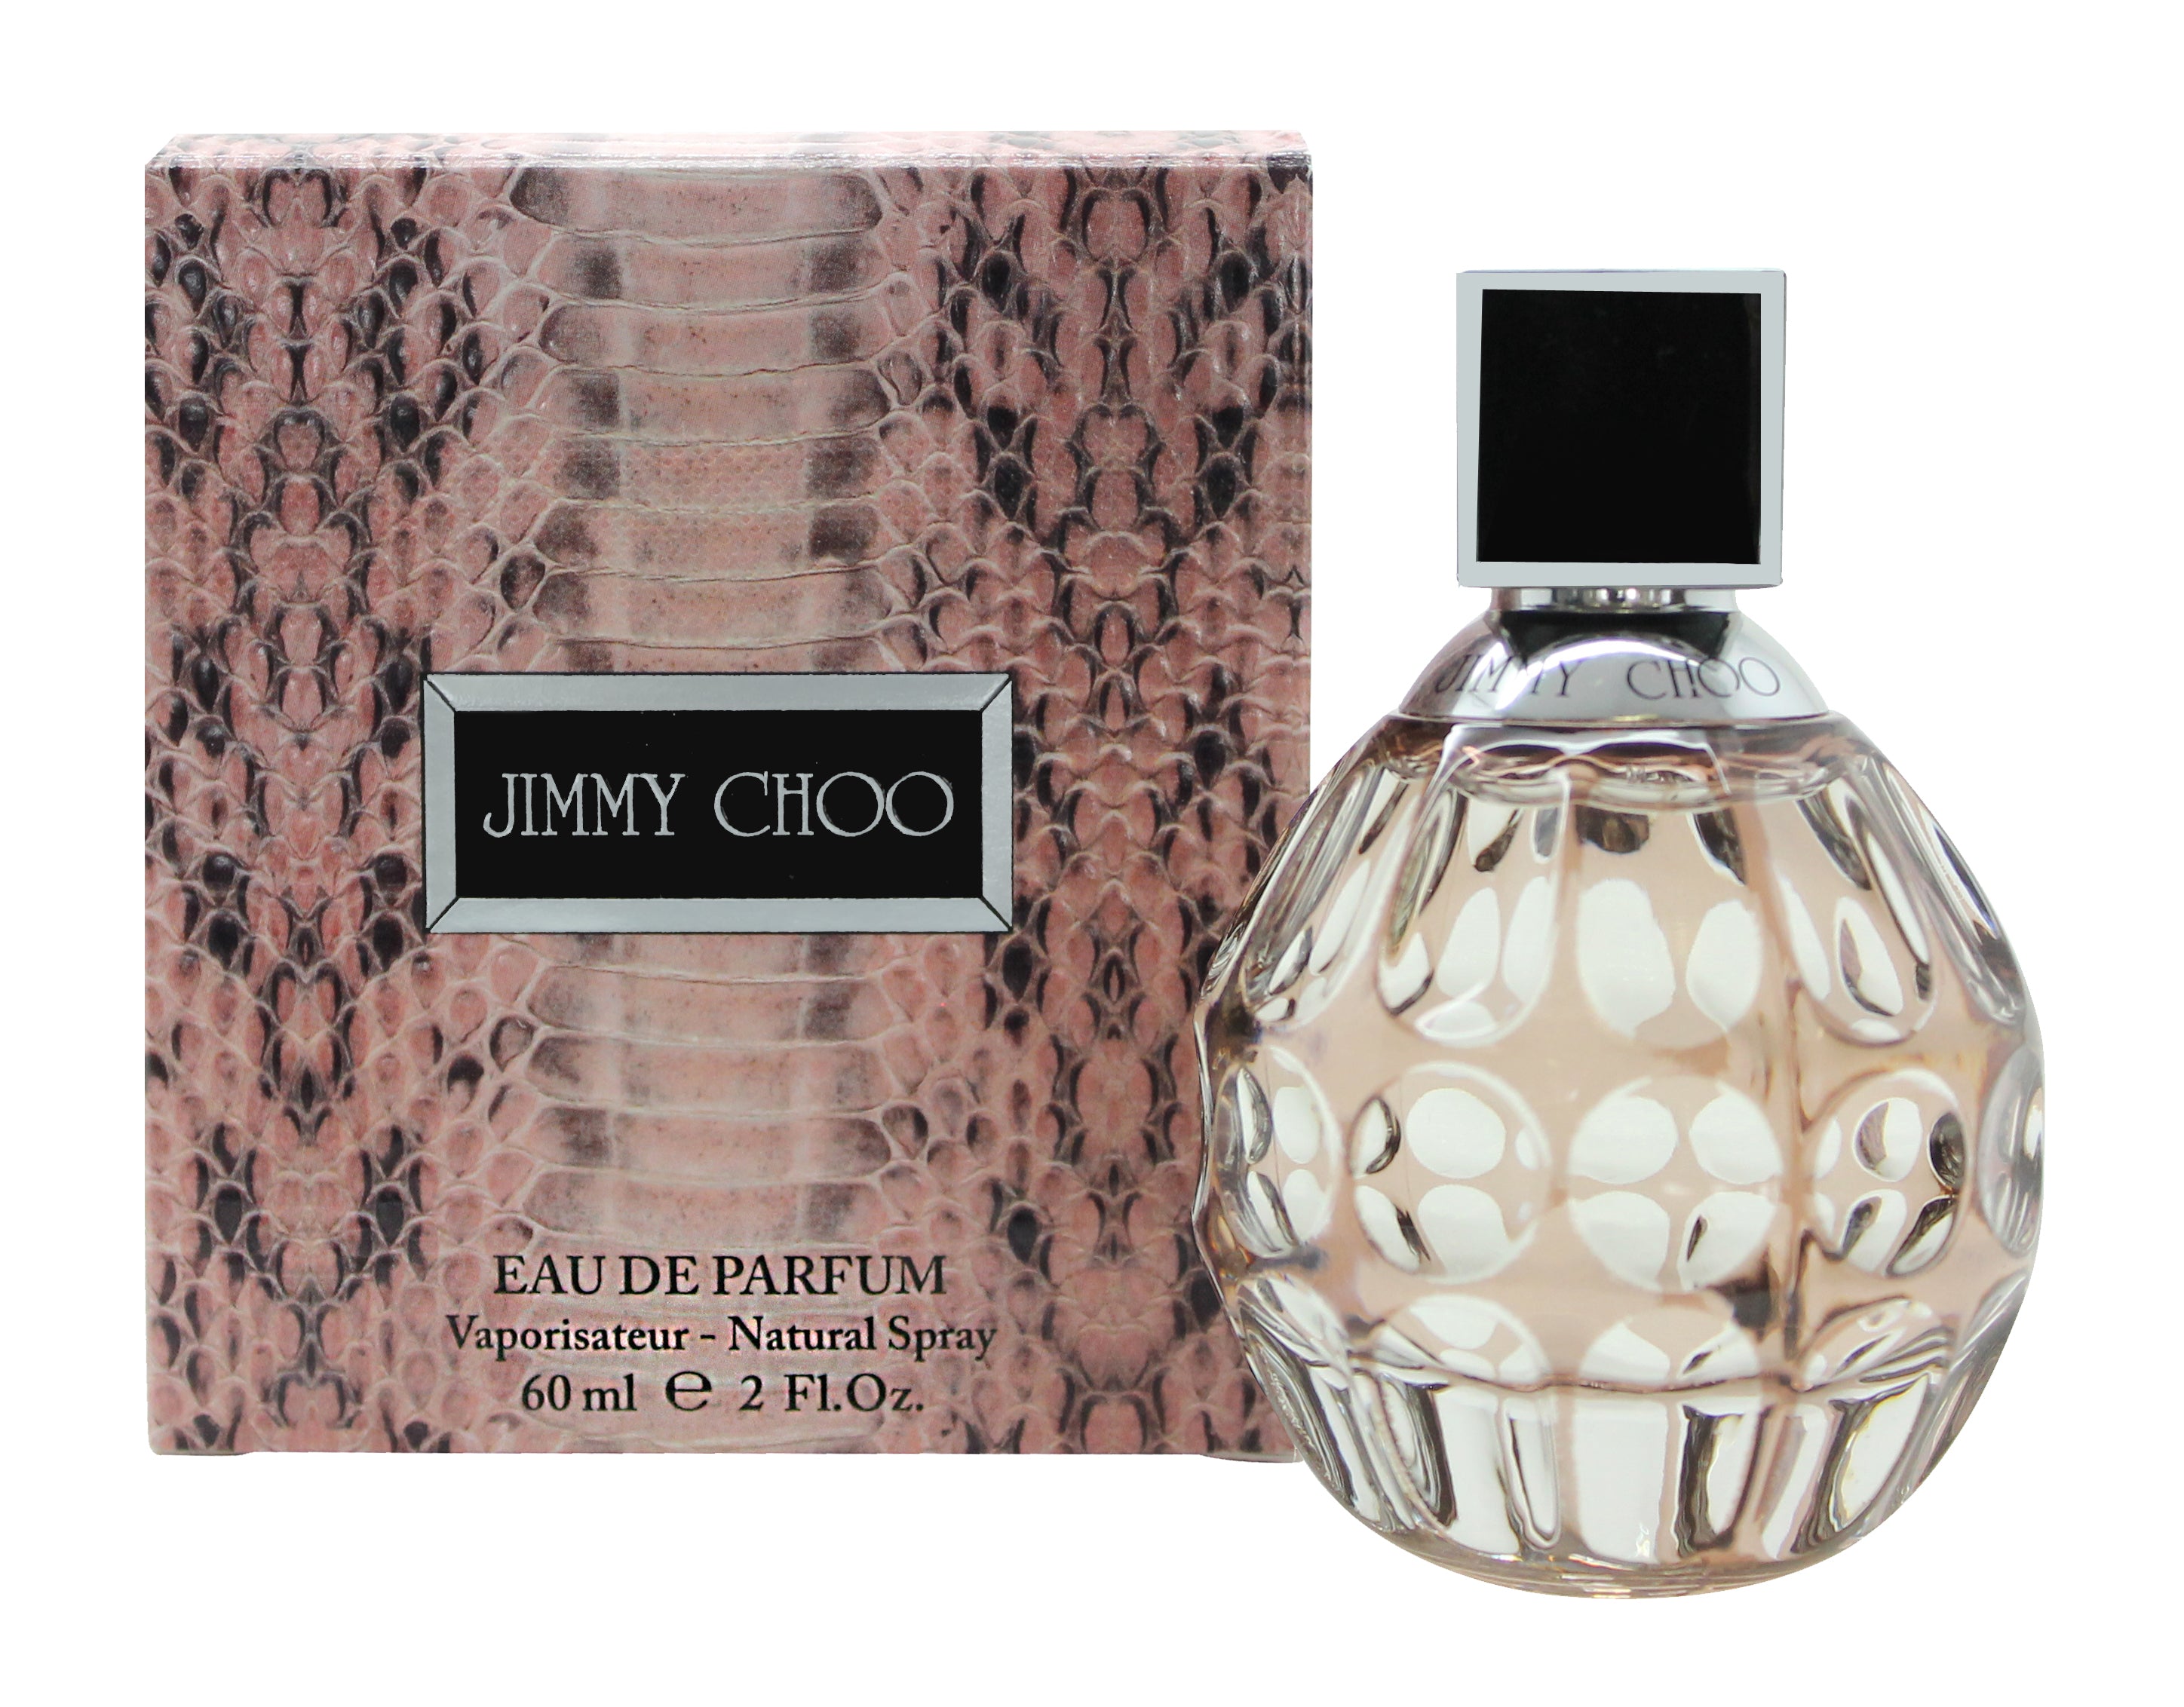 View Jimmy Choo Eau de Parfum 60ml Spray information